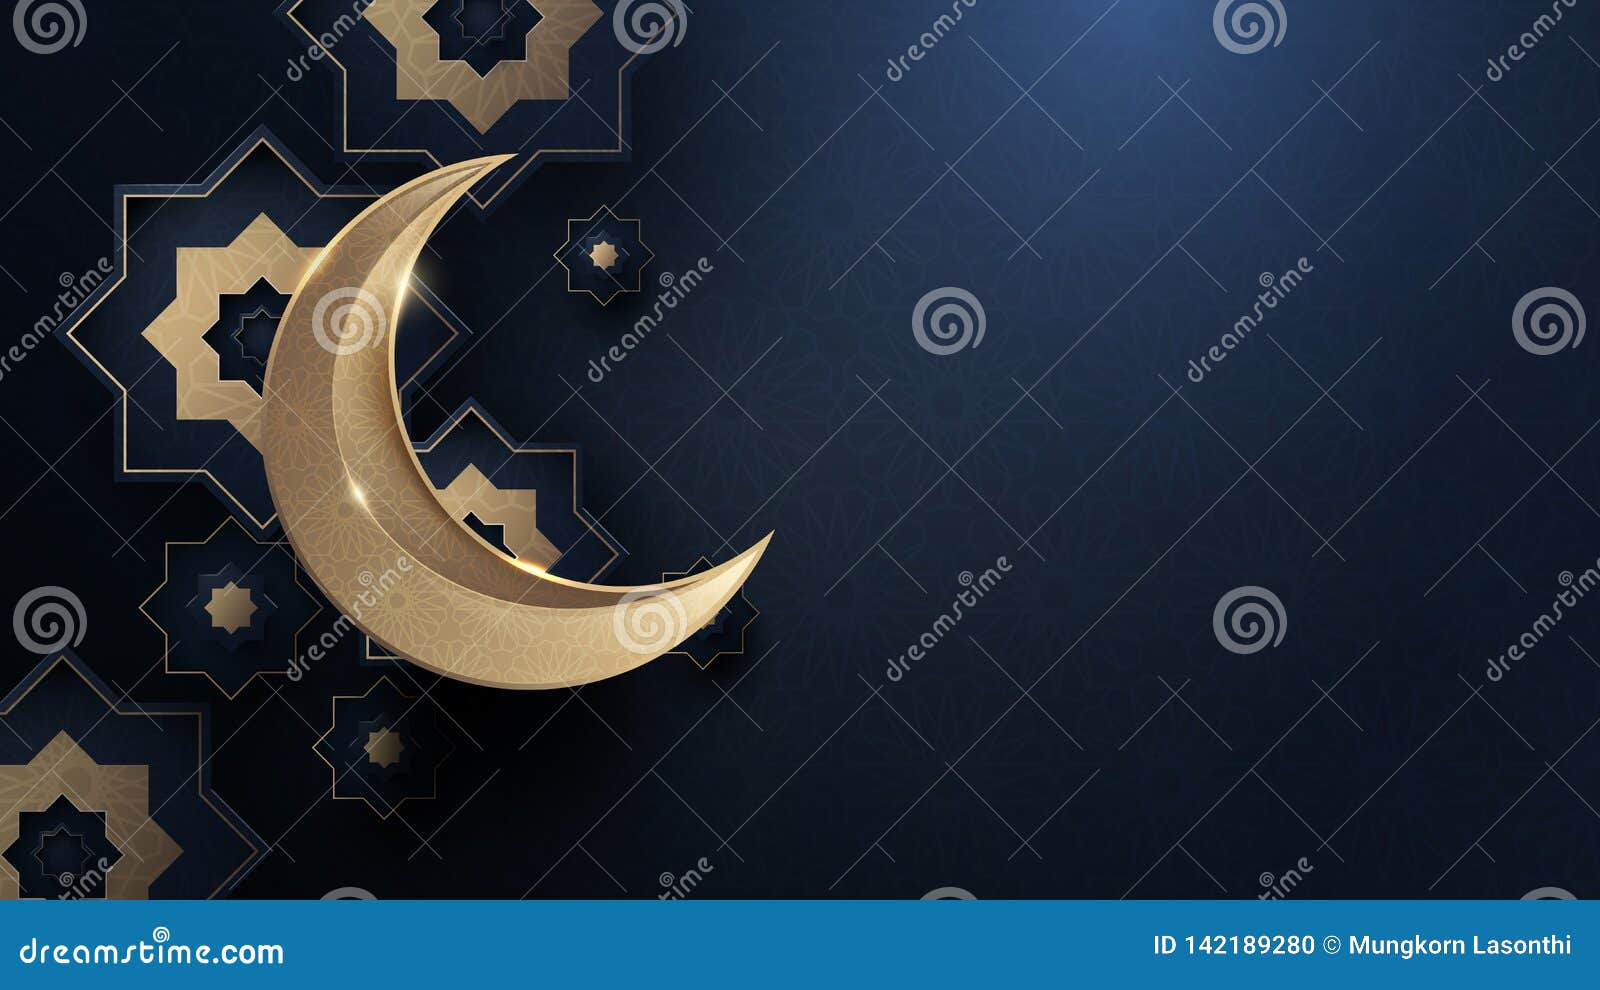 ramadan kareem. gold moon and abstract luxury islamic s background